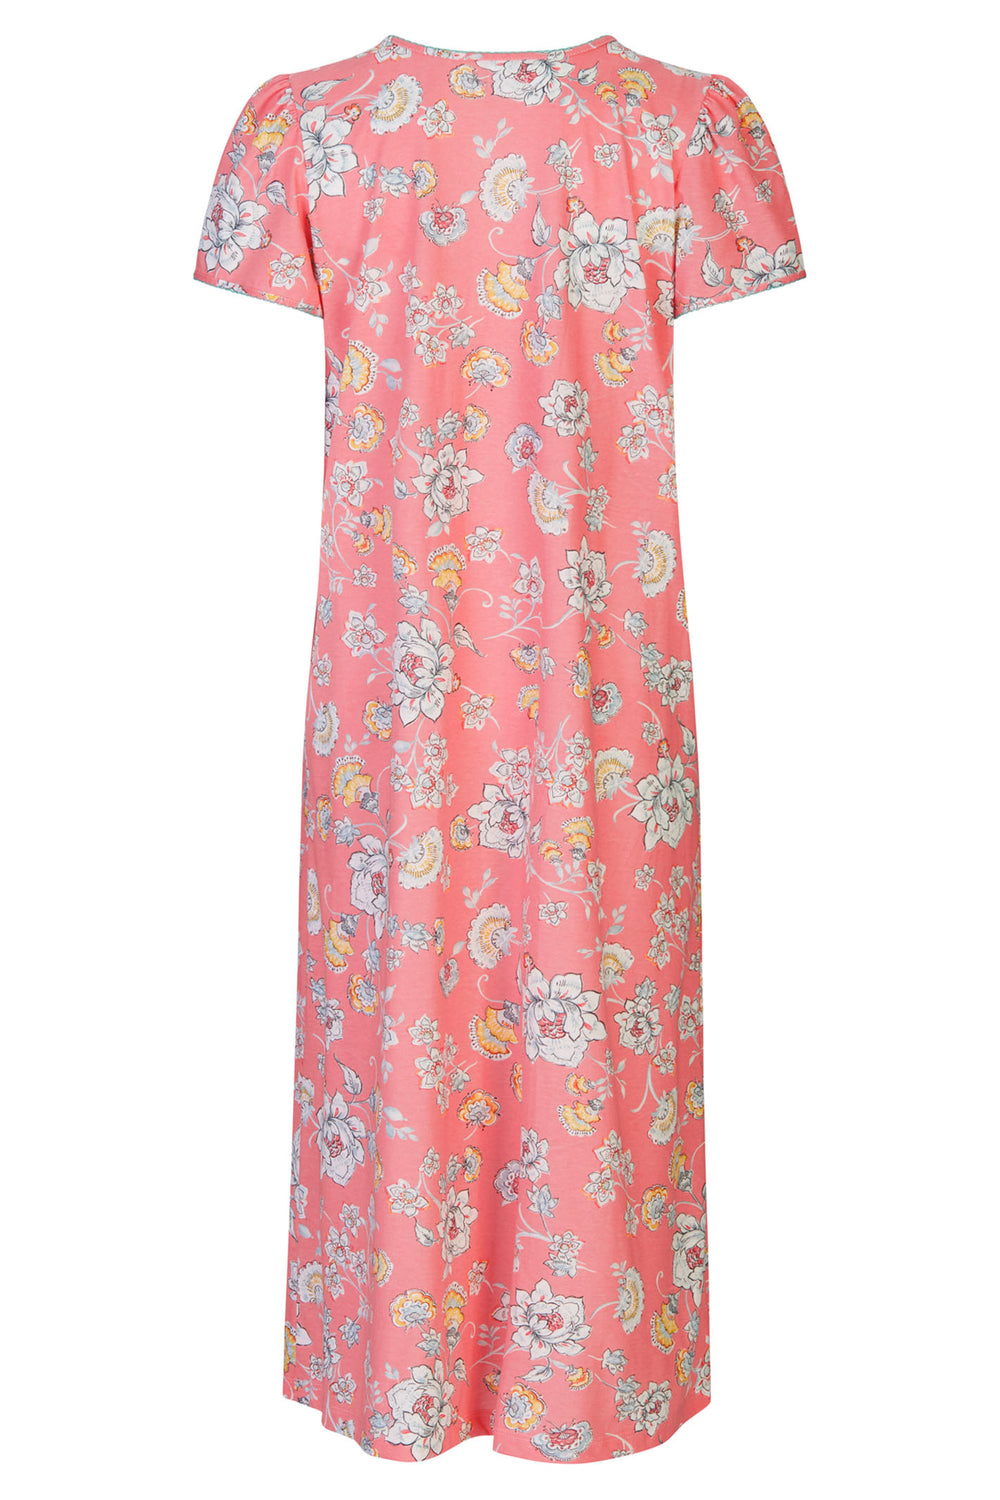 Damella 60035 488 V-Neck Coral Floral Nightdress - Shirley Allum Boutique